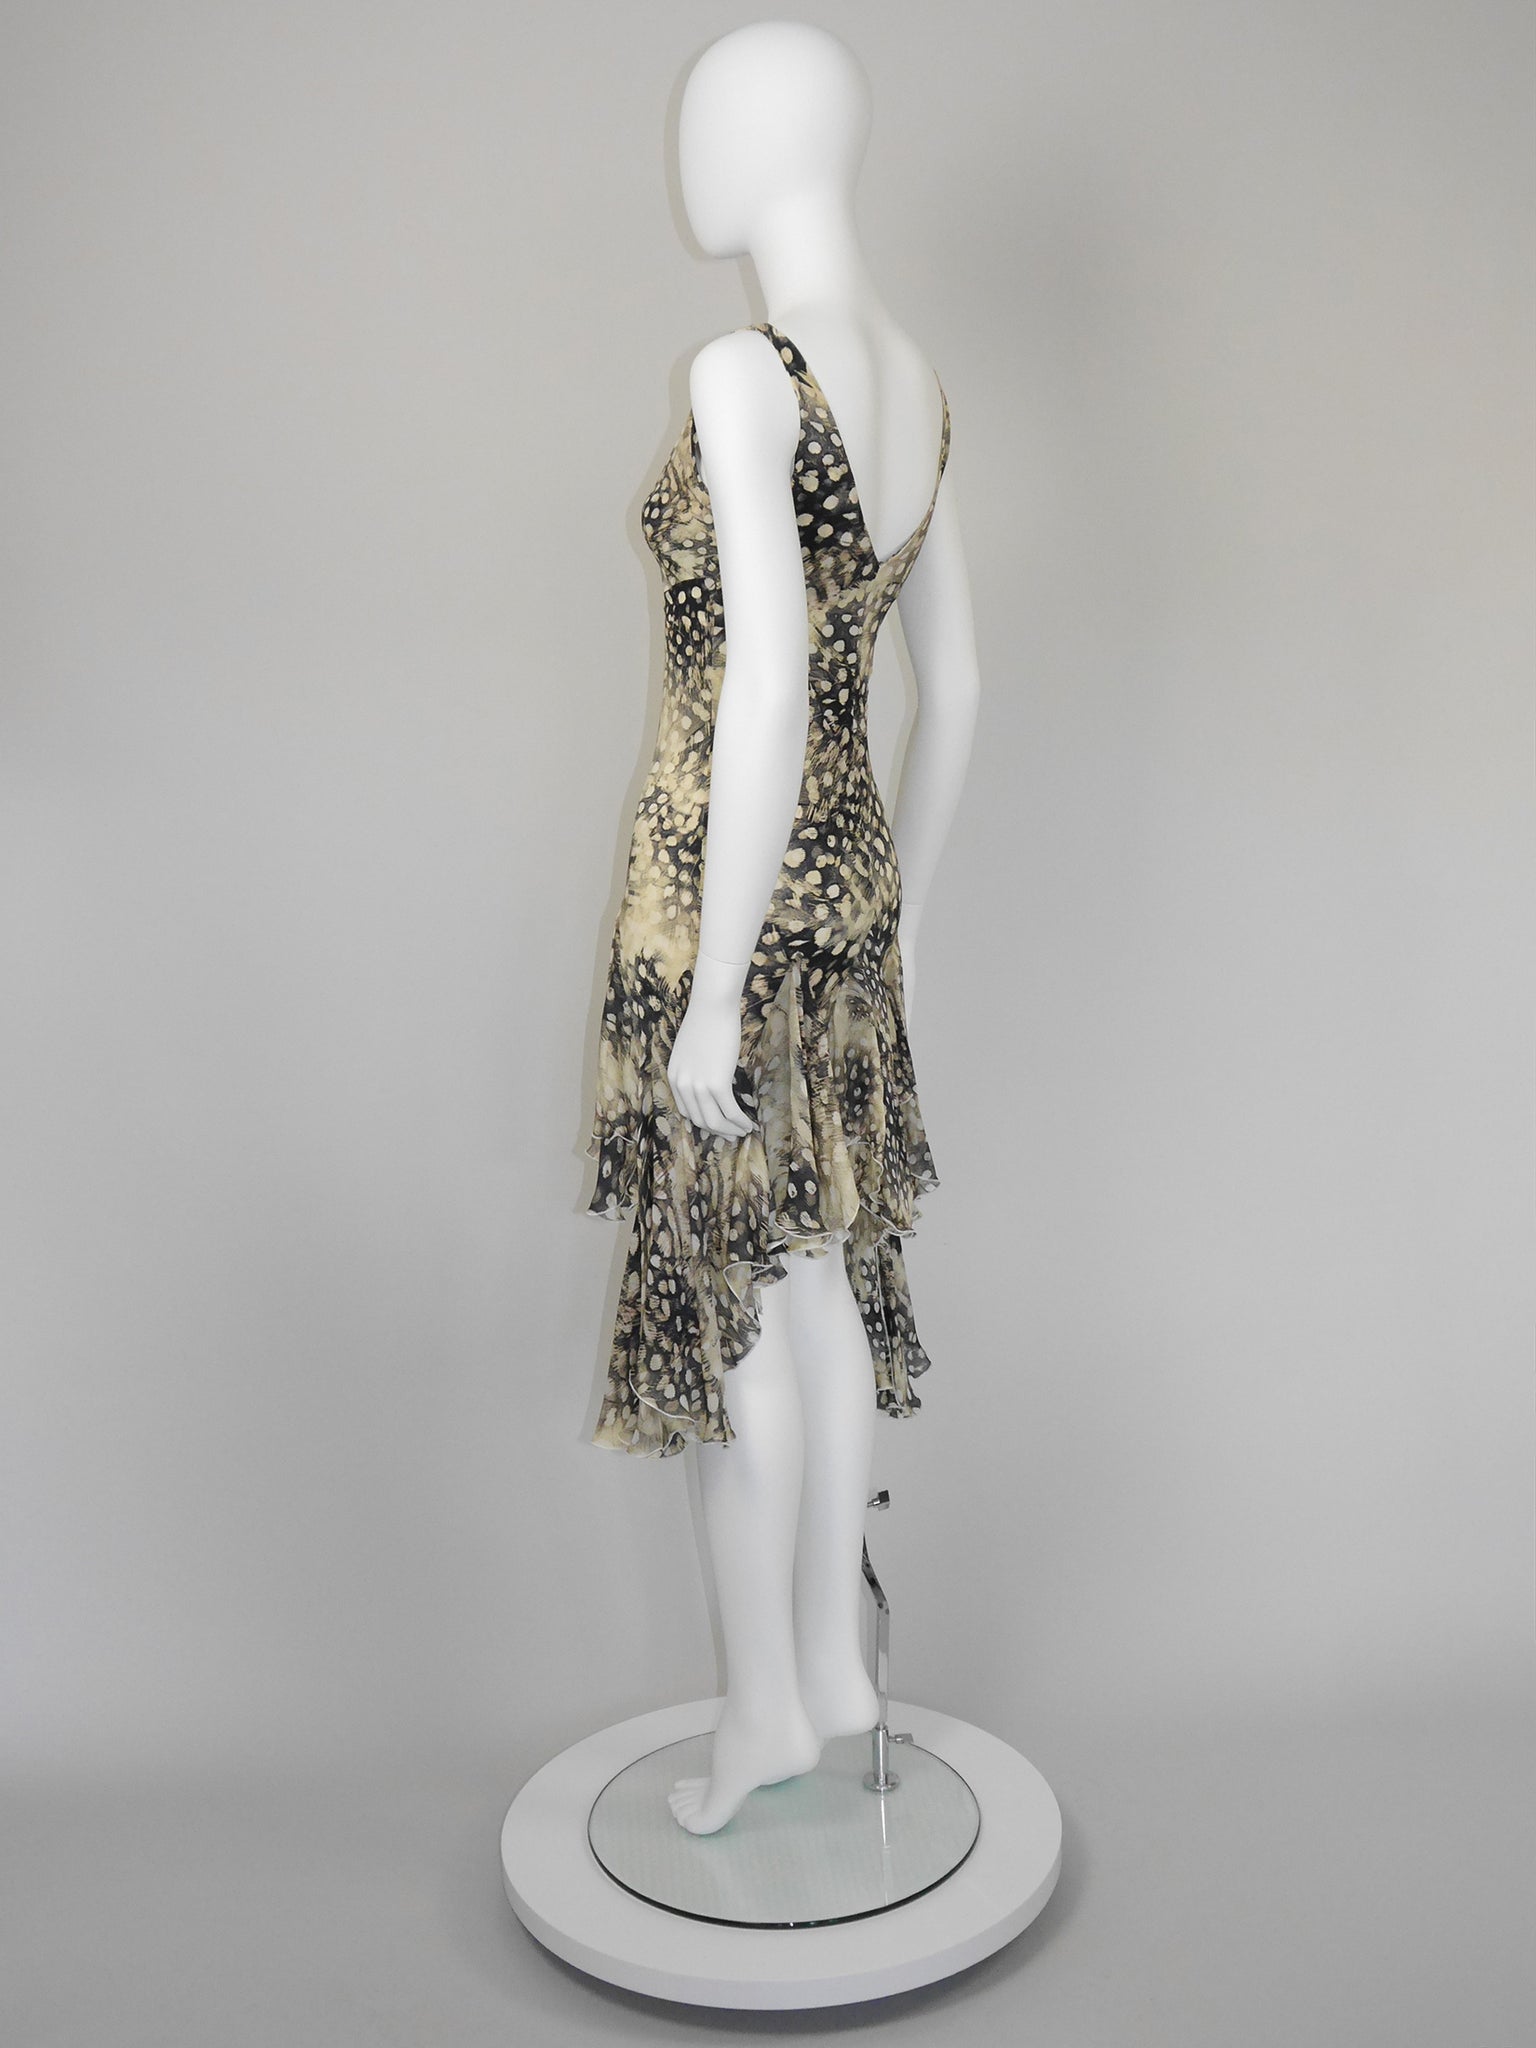 ROBERTO CAVALLI Spring 2004 Vintage Ruffled Feather Print Silk Dress Size S